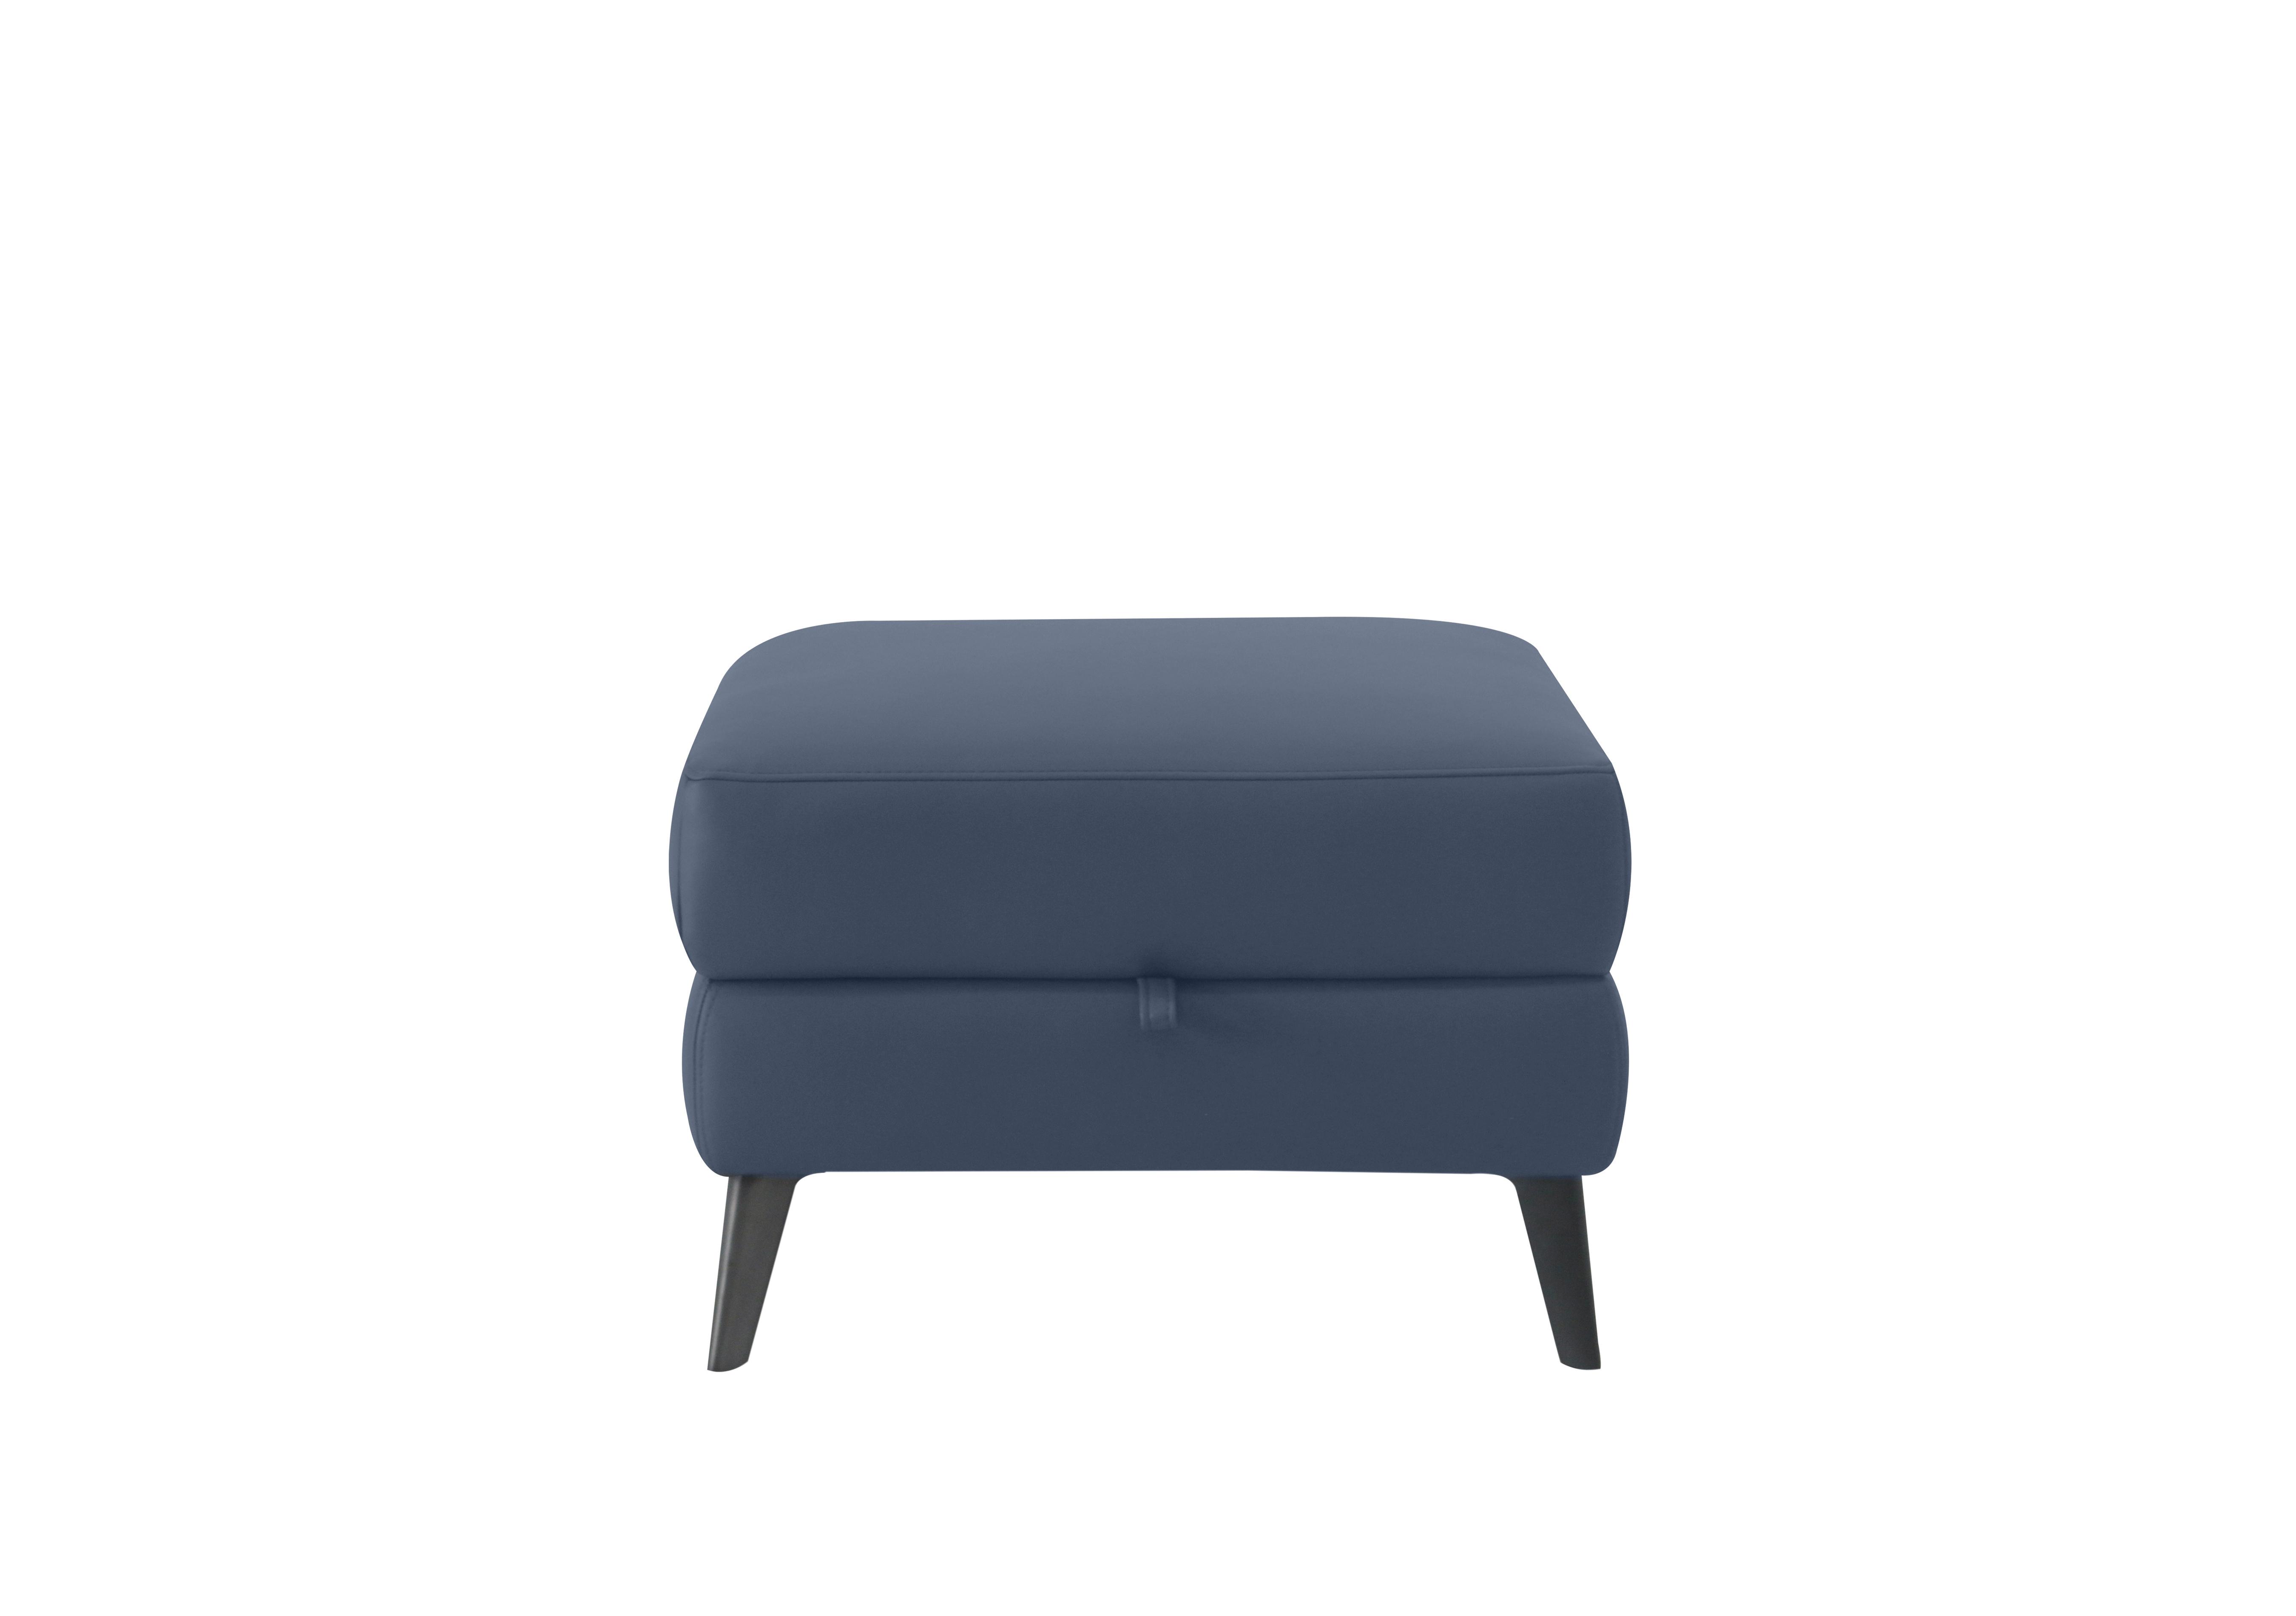 Huxley Leather Storage Footstool in Nn-518e Ocean Blue on Furniture Village